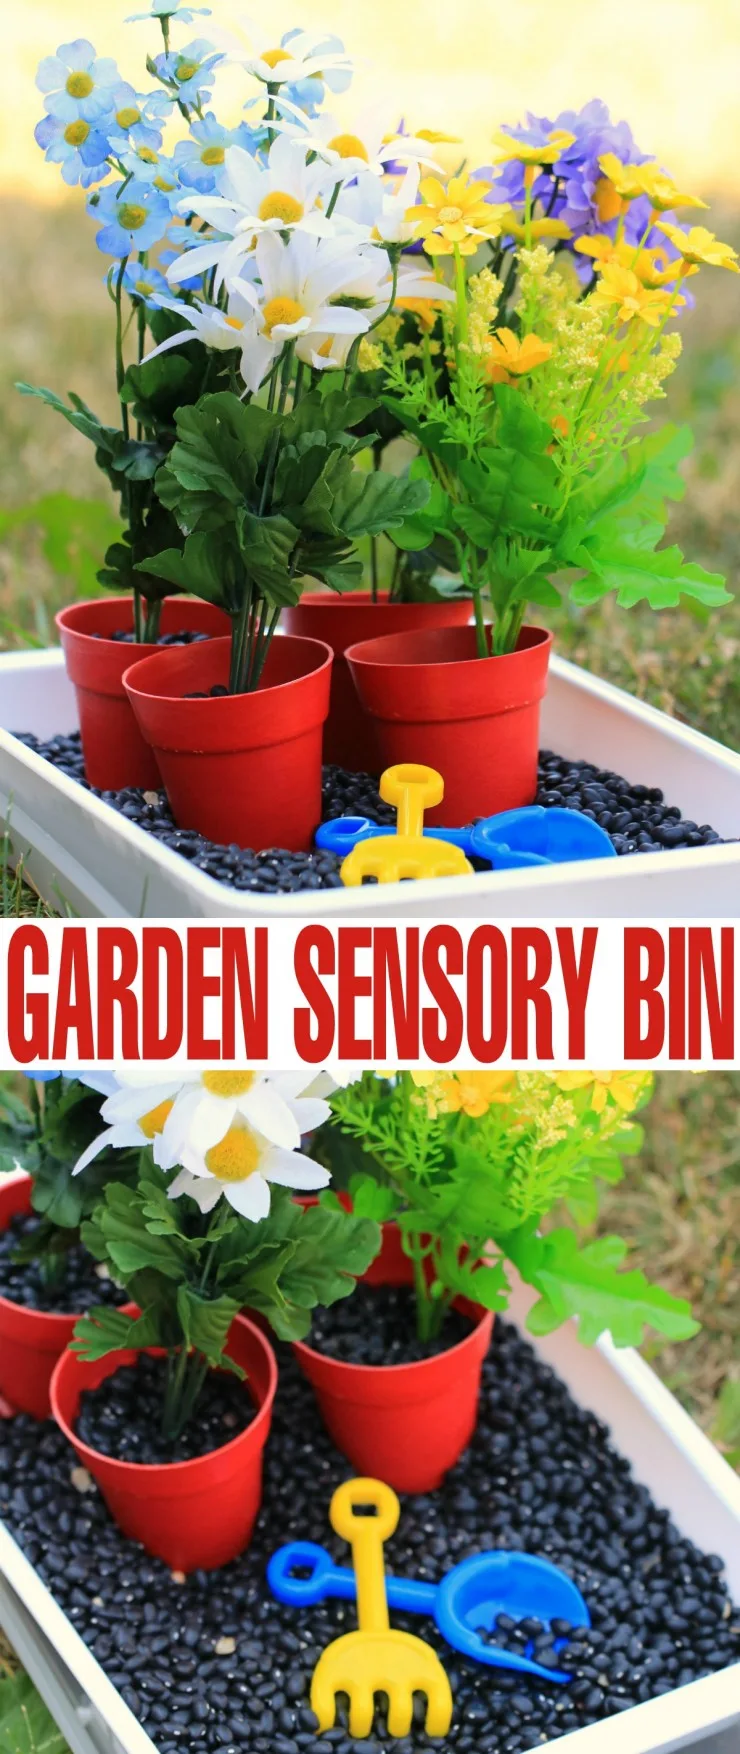 Garden-Sensory-Bin 2